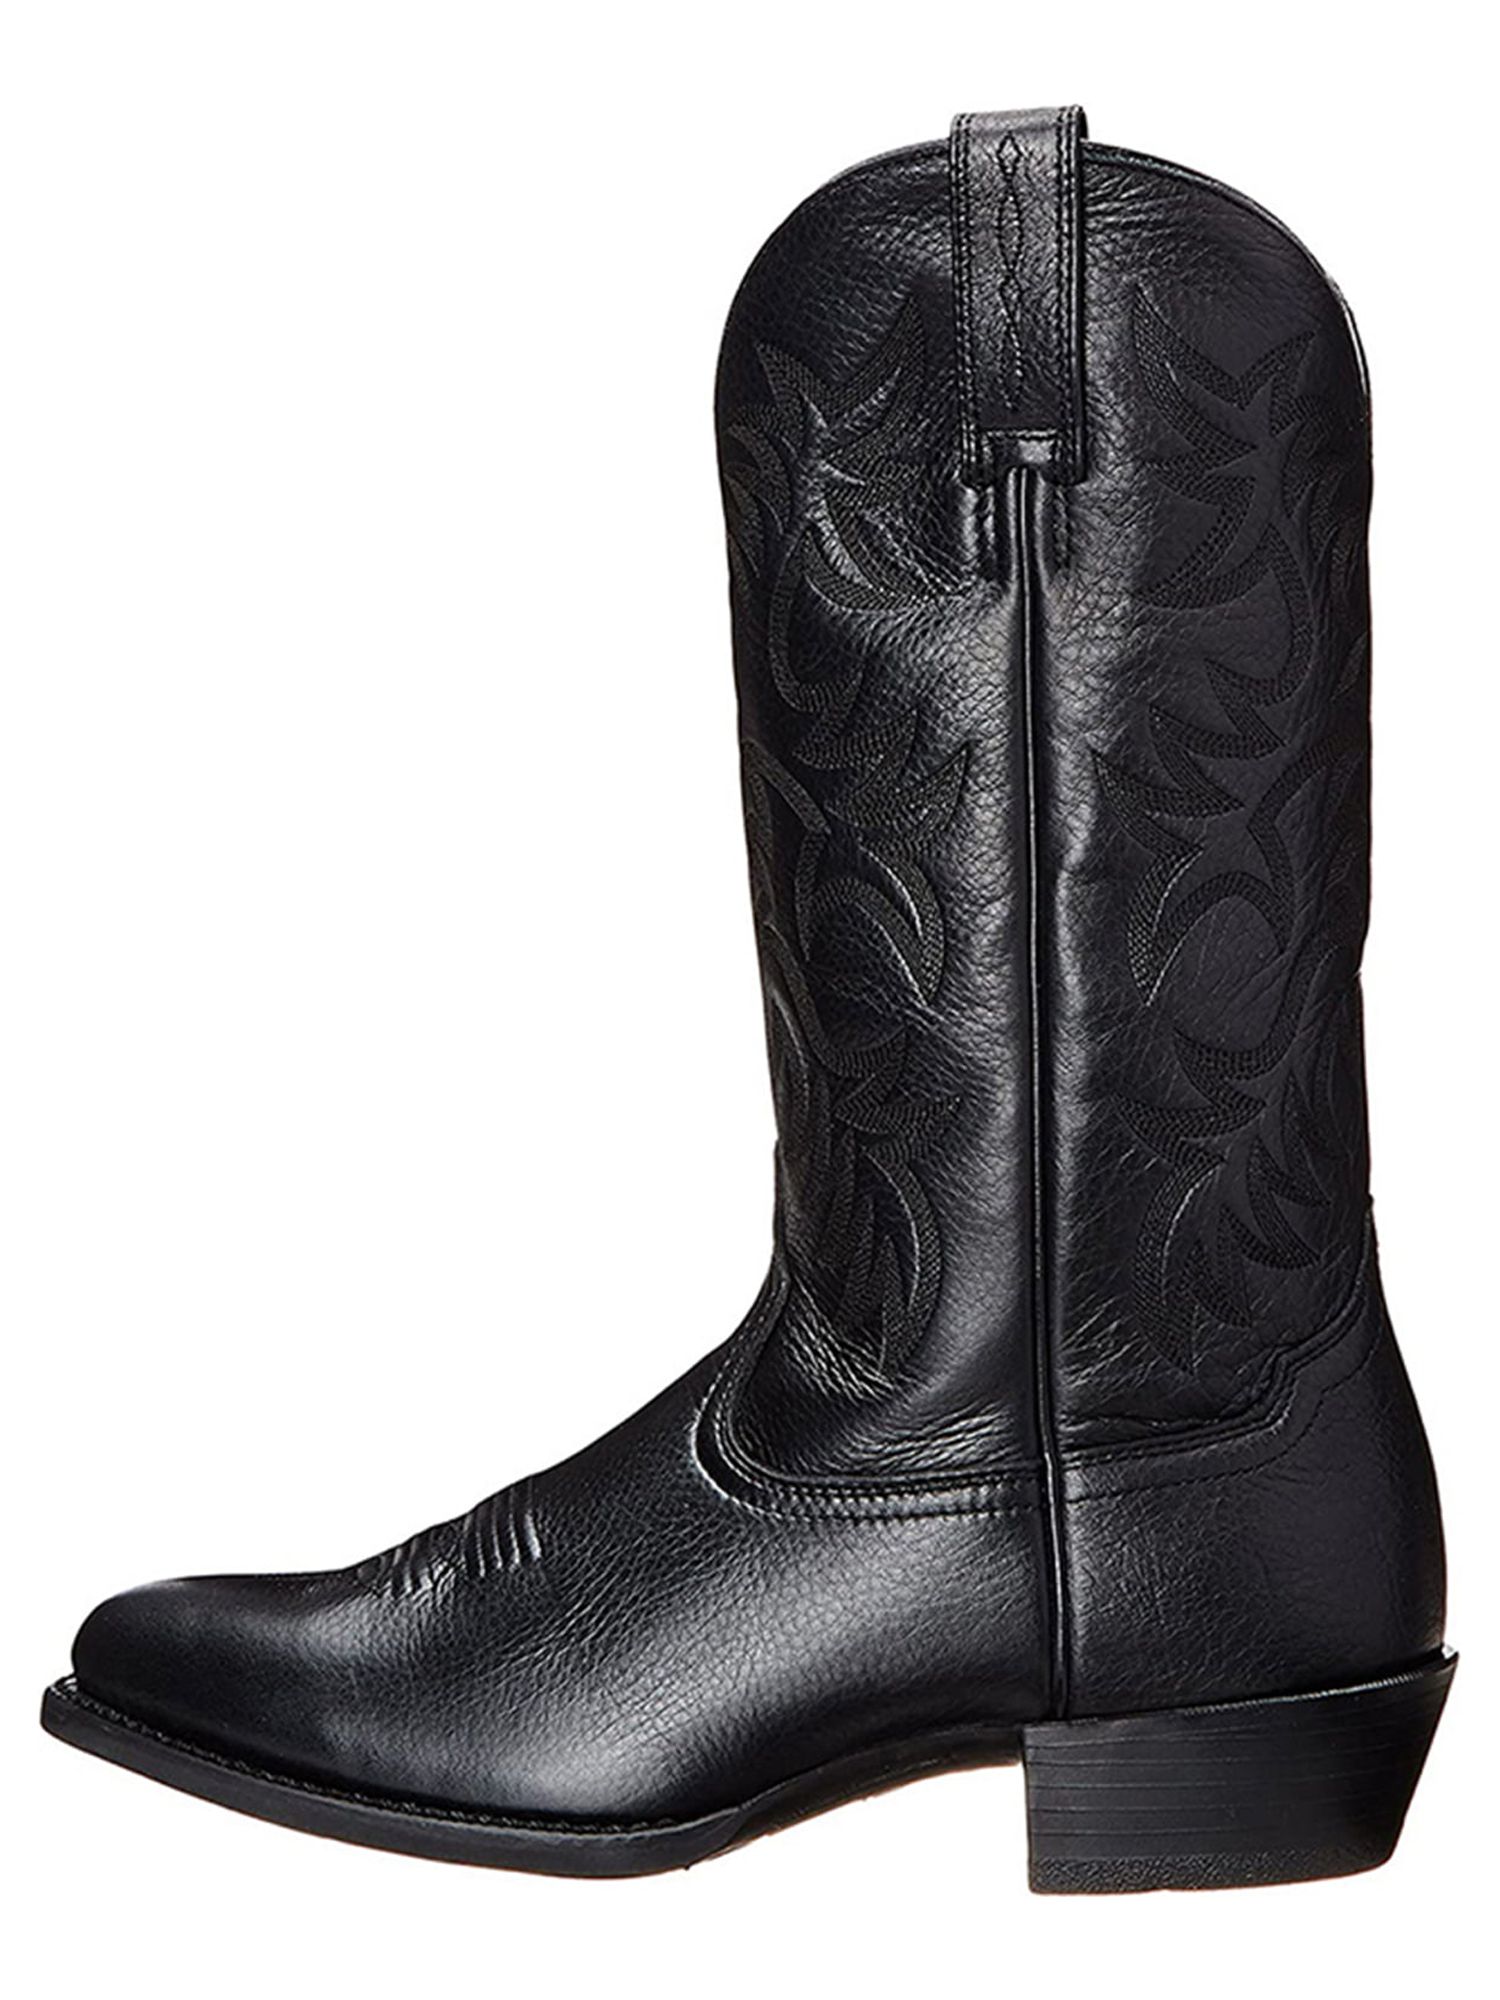 SIMANLAN Cowboy Boots for Men Comfortable Mid Calf Boot Fashion ...